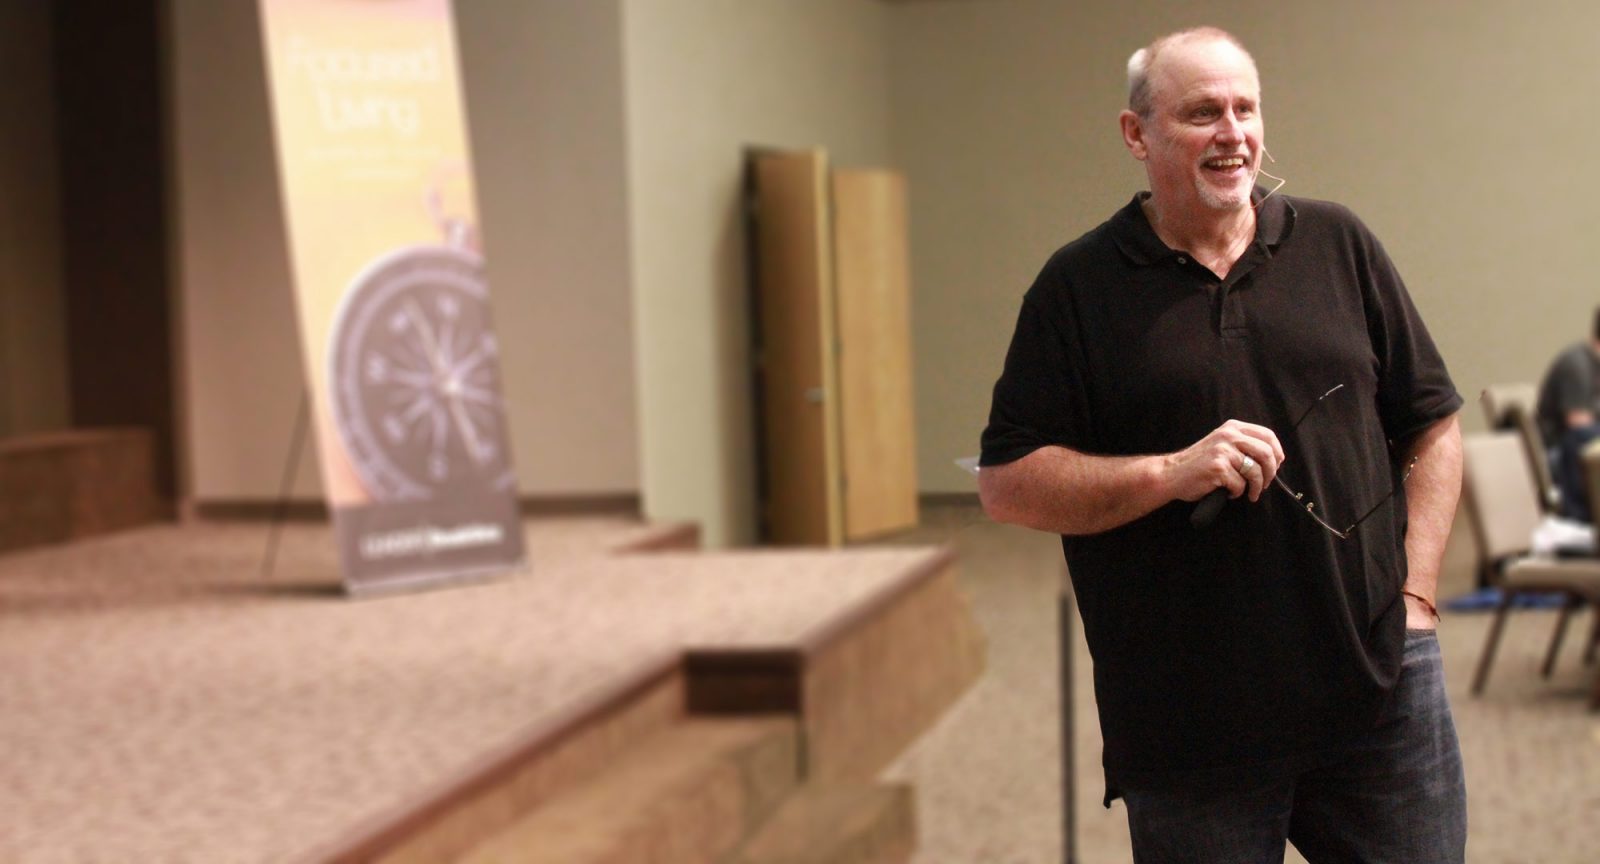 Terry Walling - Leadership Development Coach, Author, & Dreamer